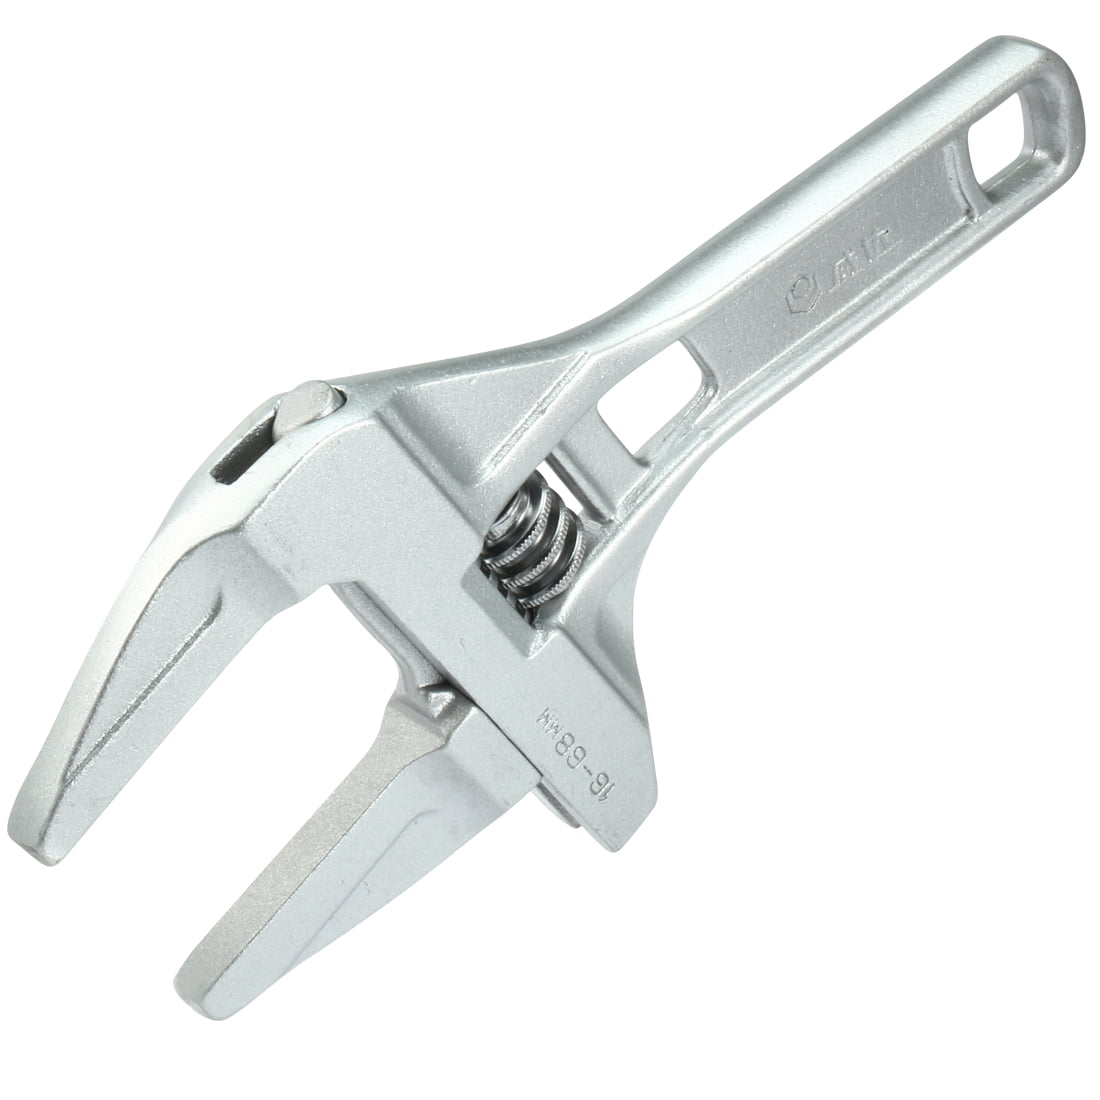 UK SELLER Adjustable Wrench Large Opening Spanner Wrench Nut Key Tool DIY 10'' 